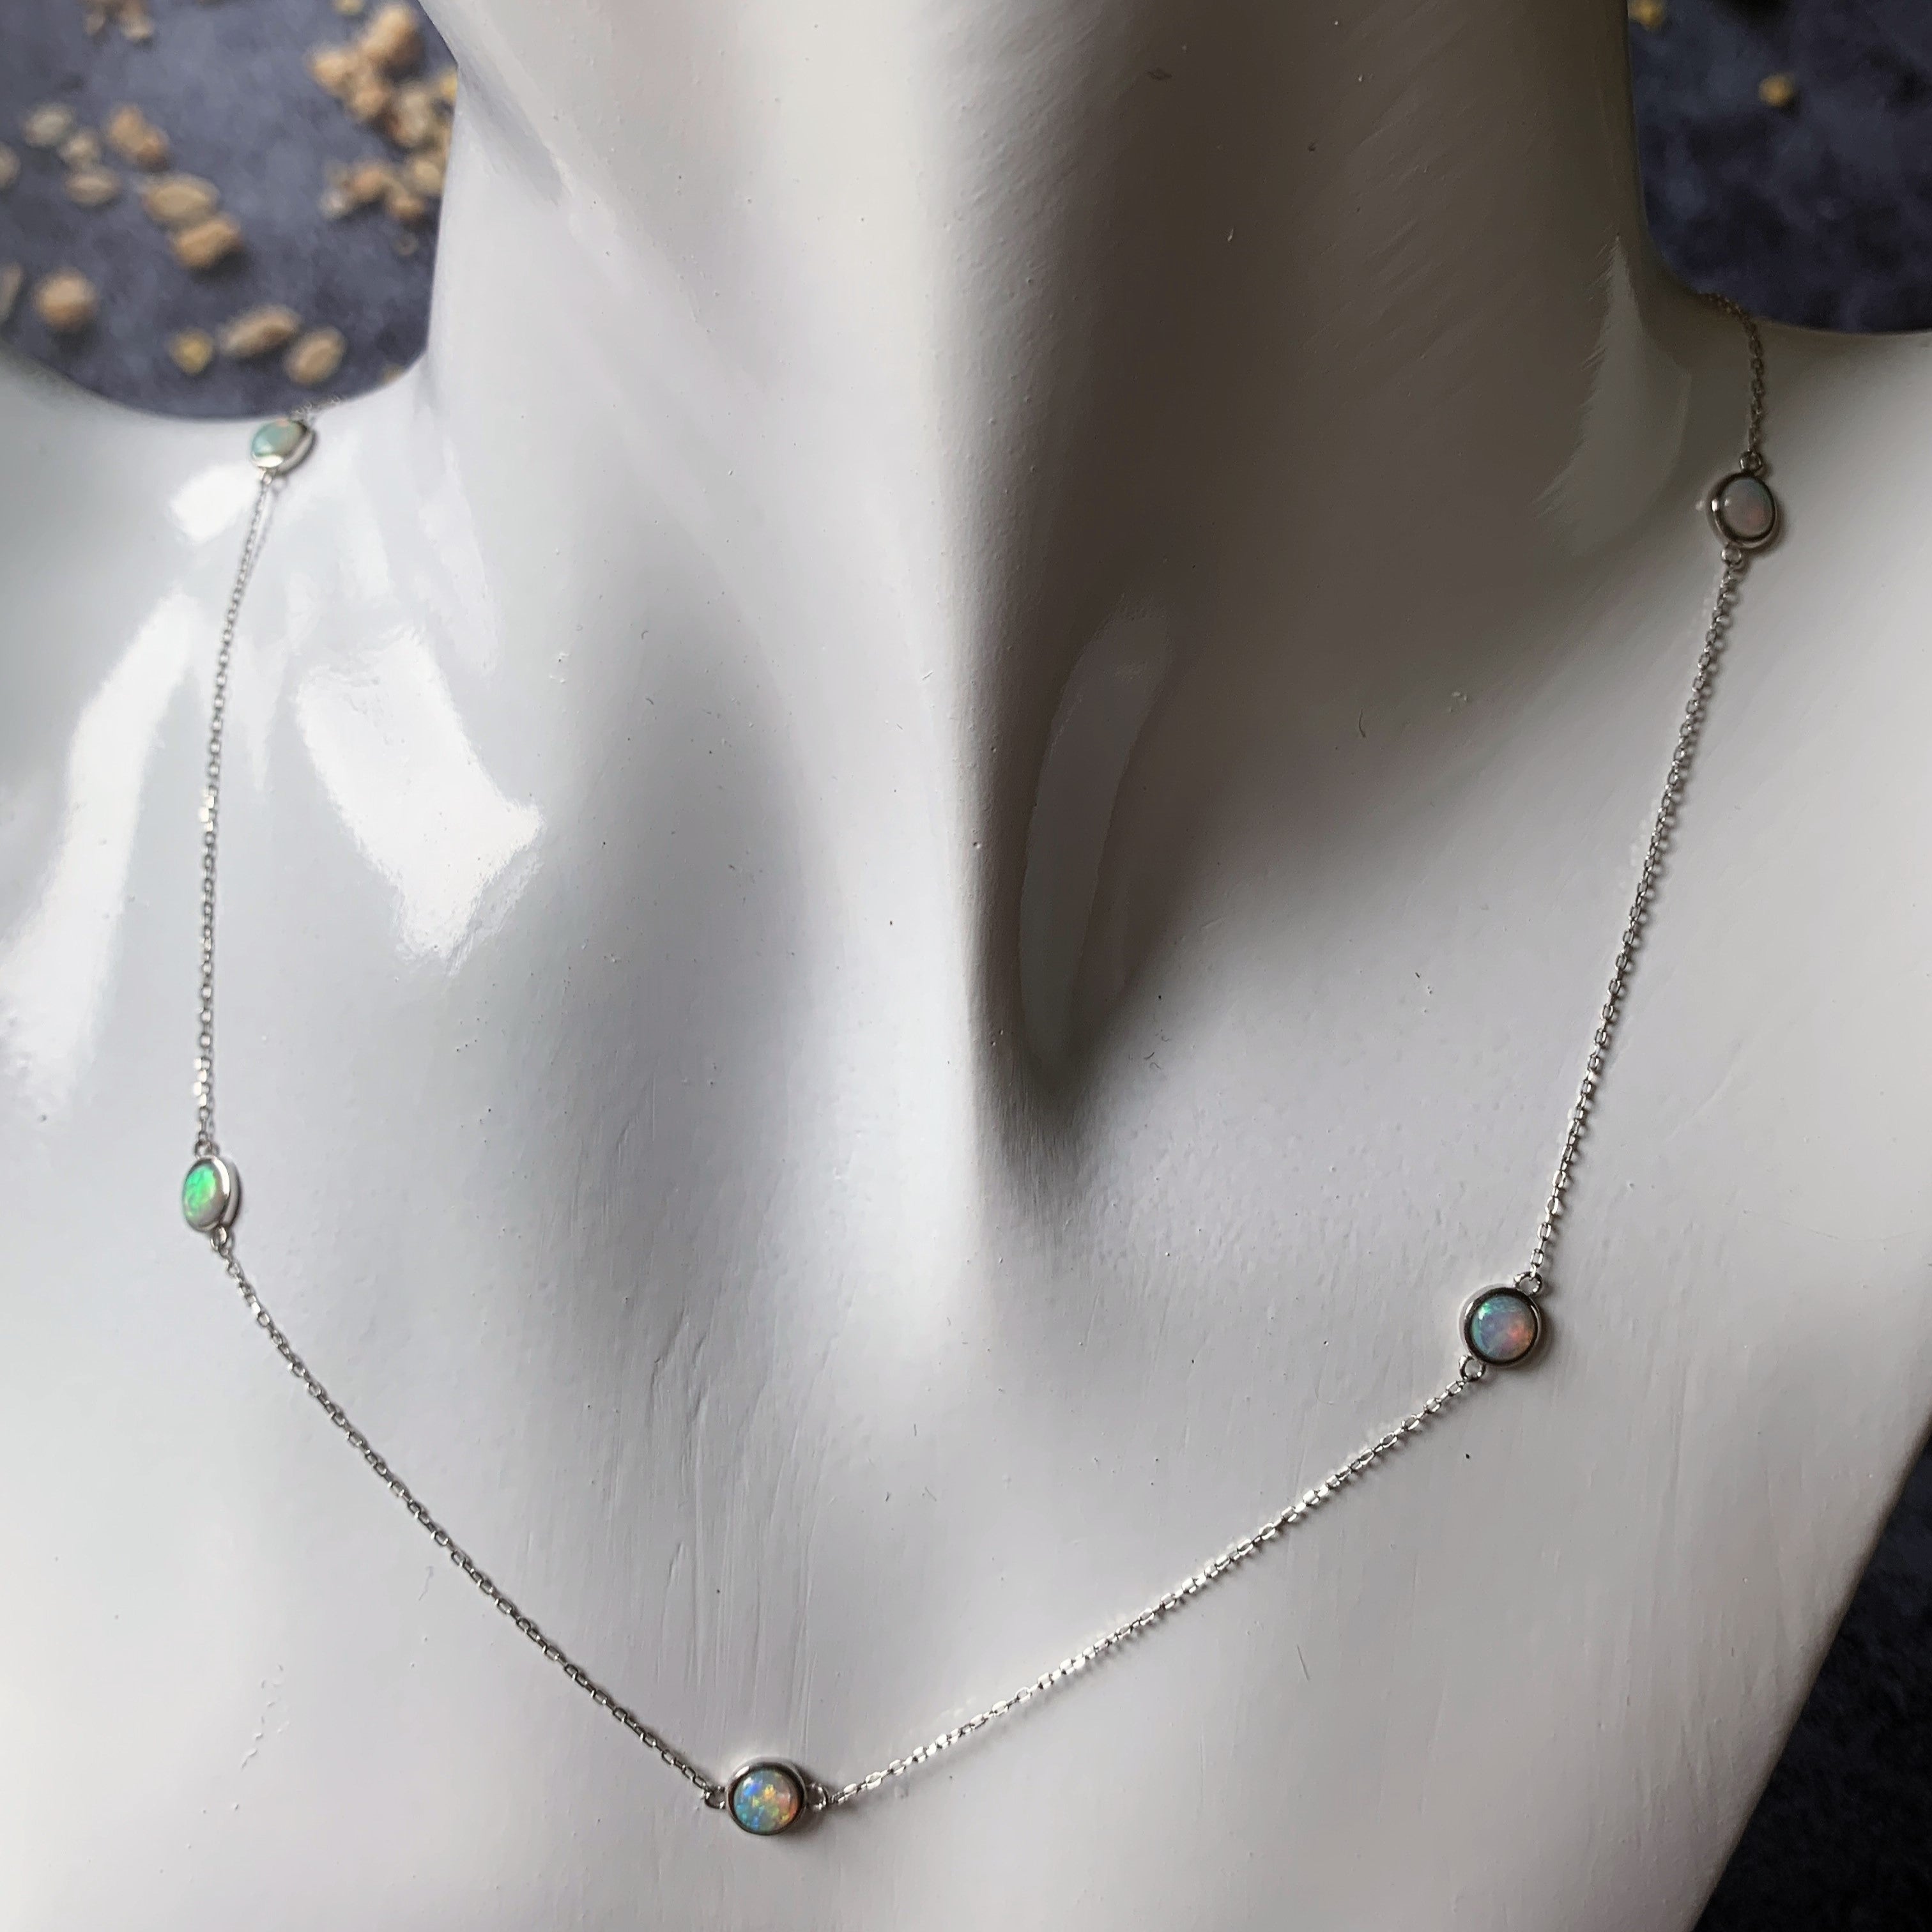 9kt White Gold spacer White Opal necklace - Masterpiece Jewellery Opal & Gems Sydney Australia | Online Shop